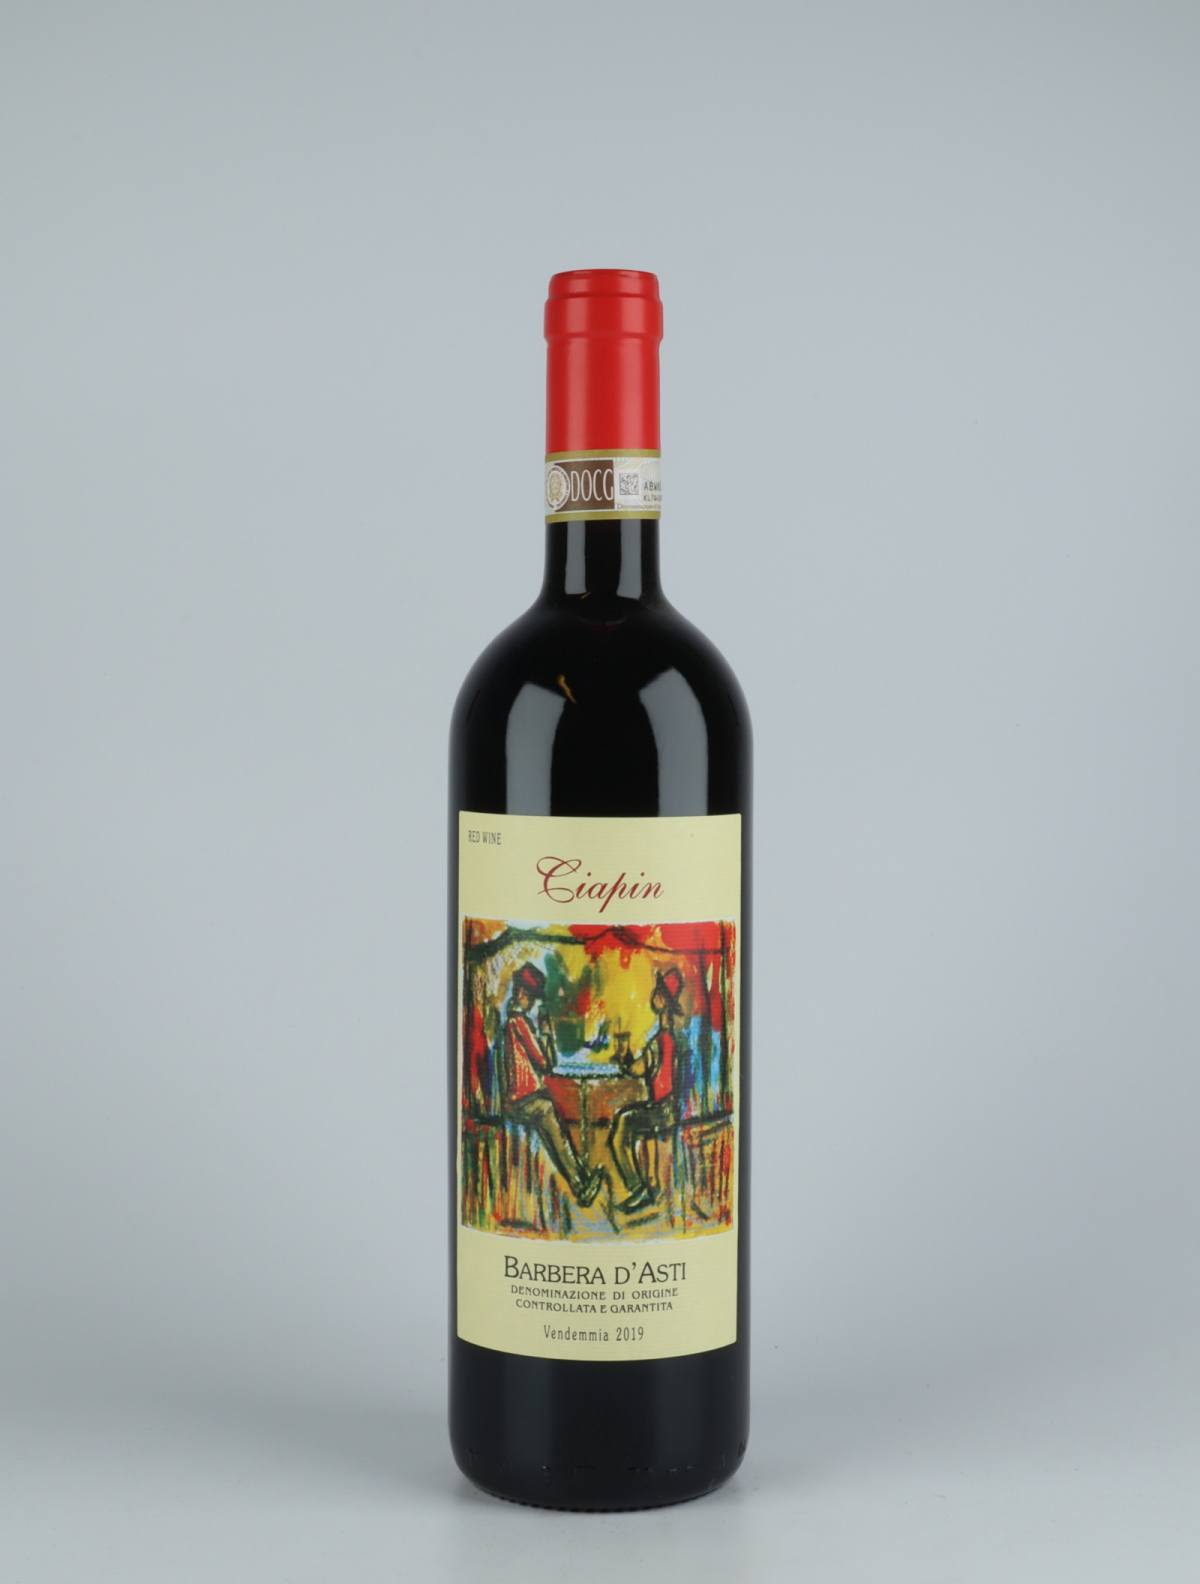 En flaske 2019 Ciapin Rødvin fra Andrea Scovero, Piemonte i Italien